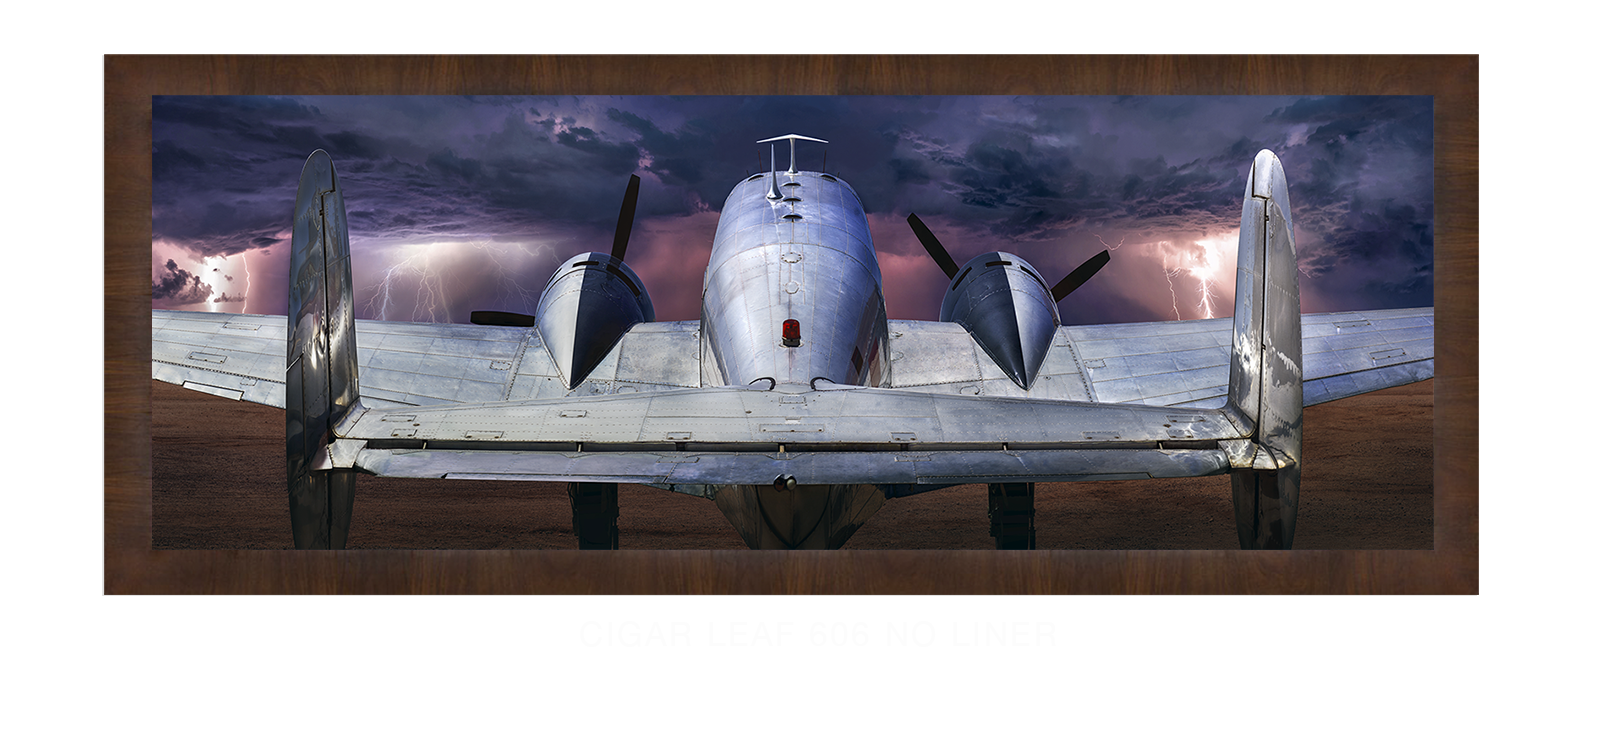 22DOYEN REIGN Cigar Leaf 606 w_No Liner T